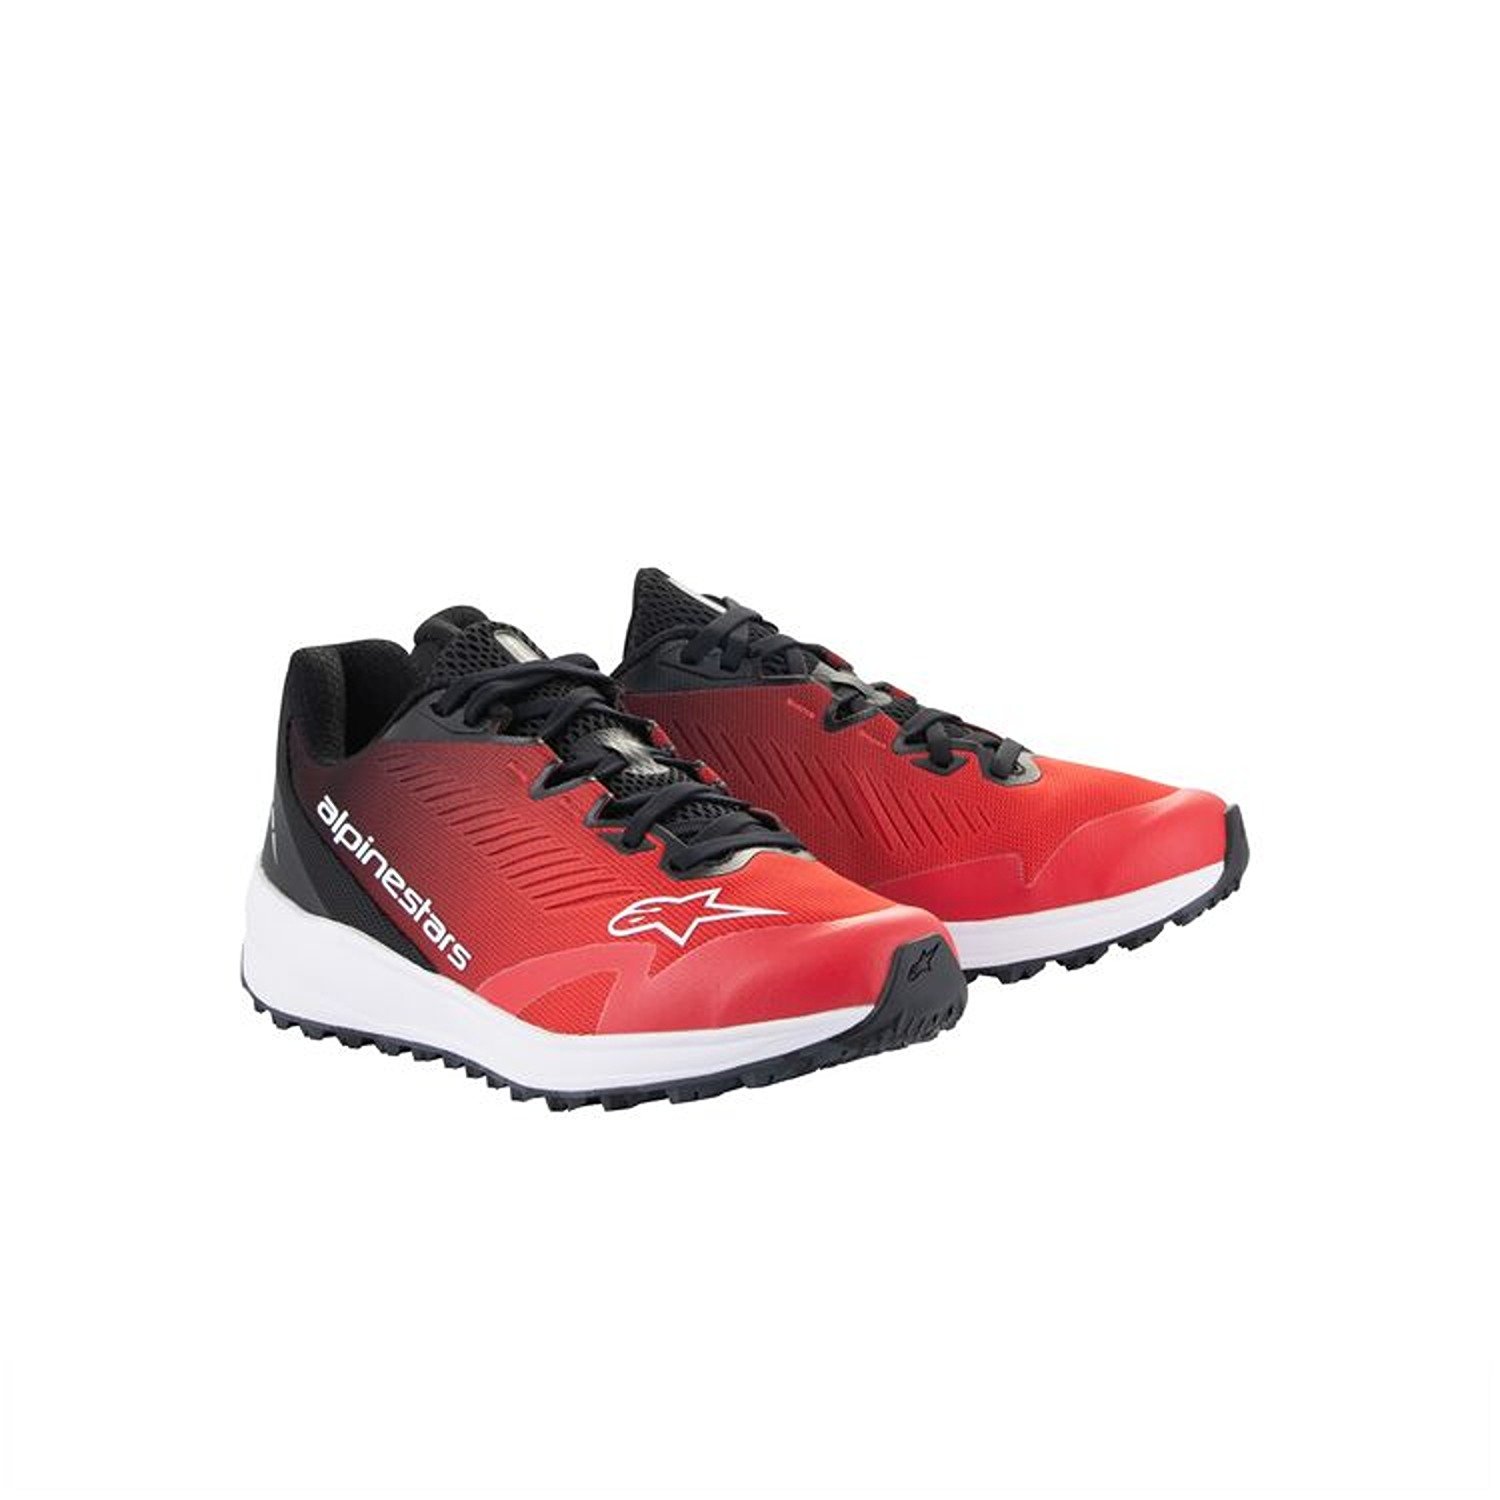 Image of Alpinestars Meta Road V2 Shoes Red Black White Size US 125 ID 8059347353630